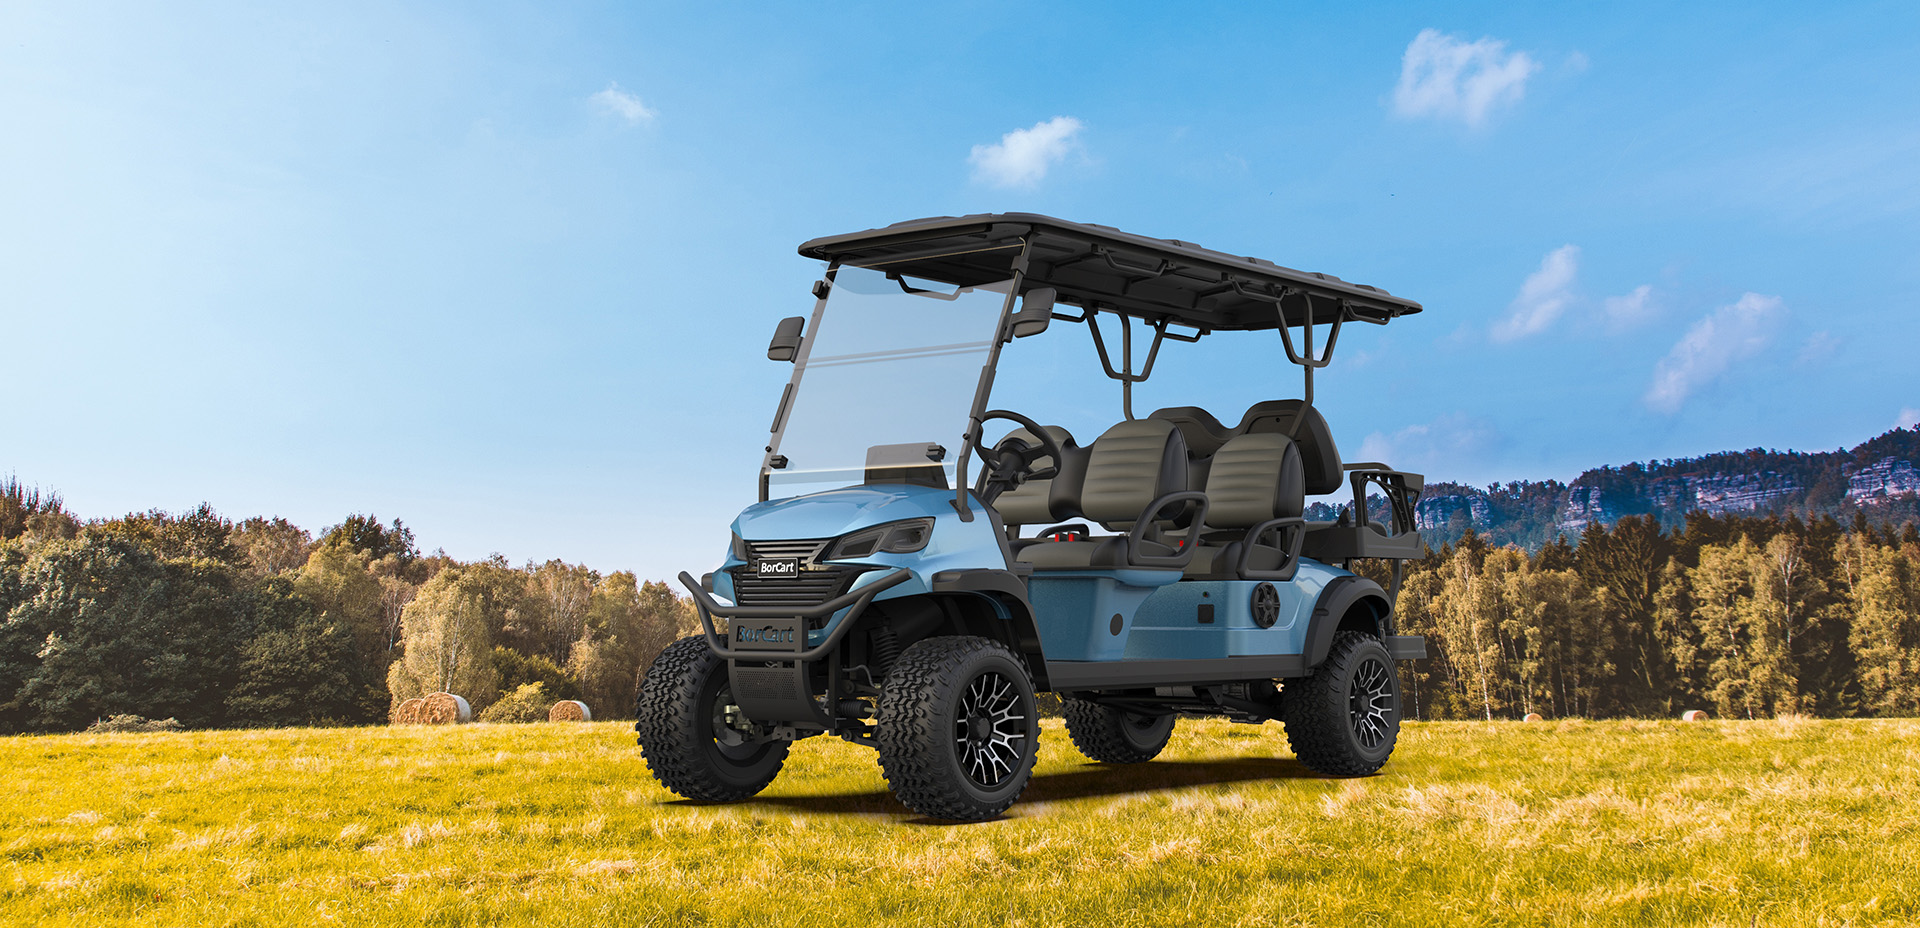 ET off road vehicle adult all-terrain ATV cart 6 seats golf cart  